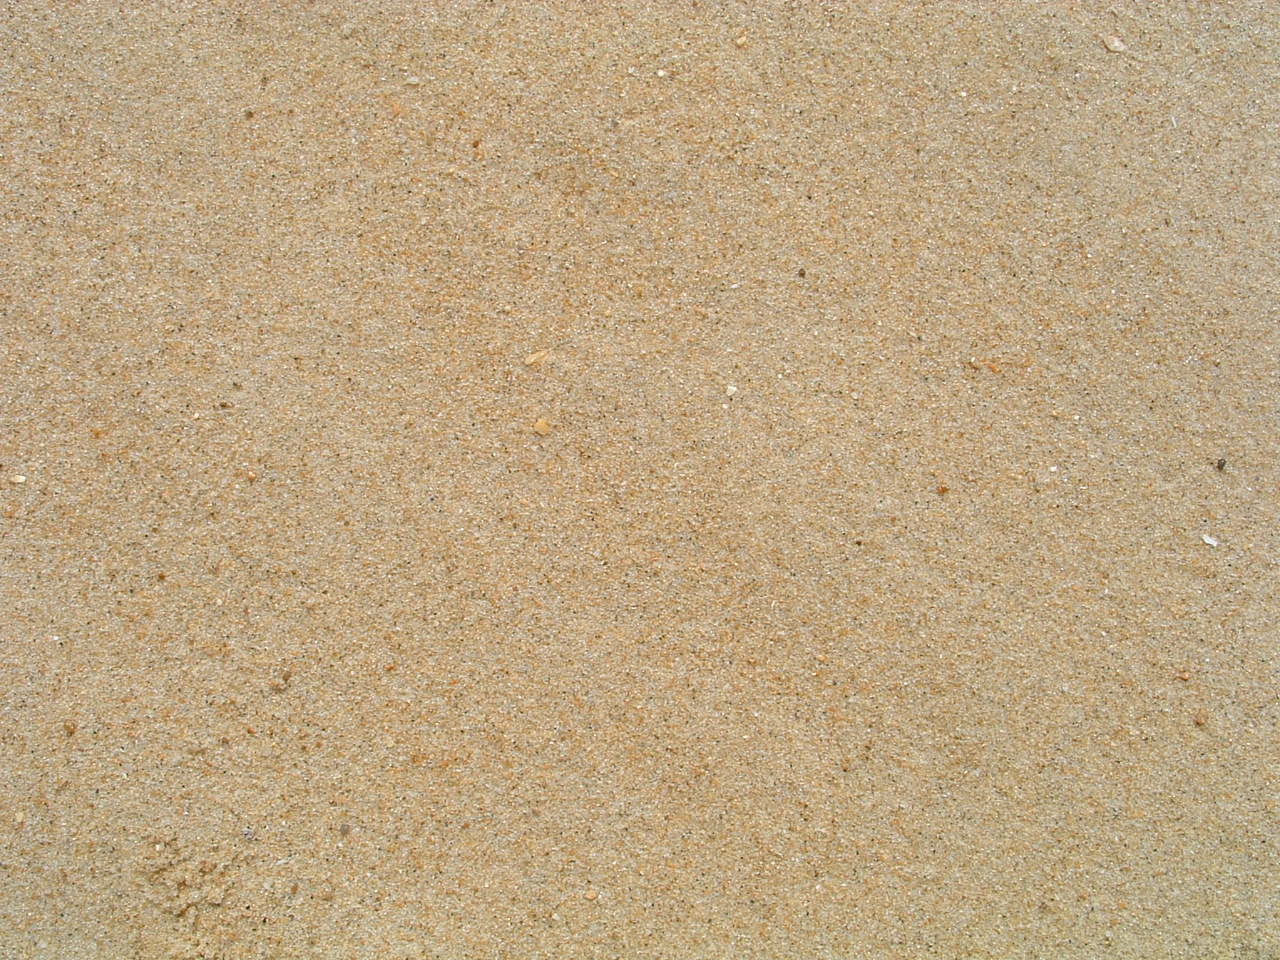 File:Sand.jpg